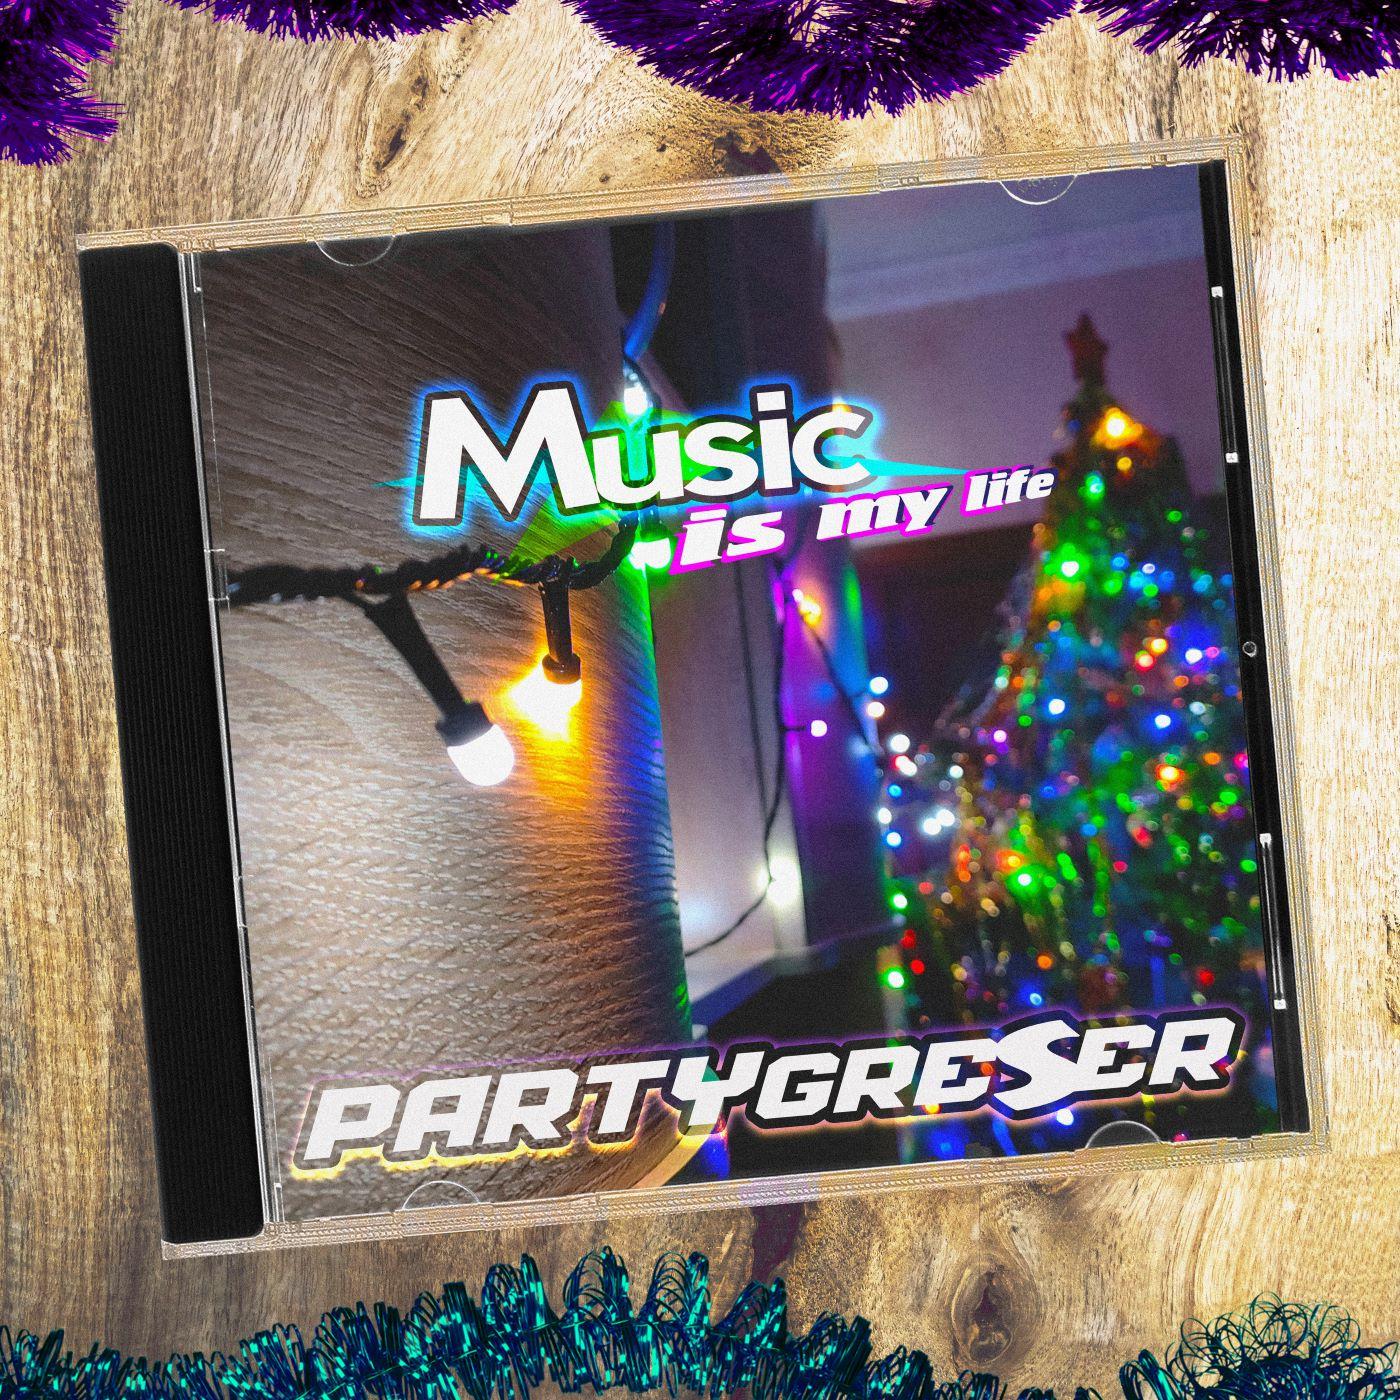 Partygreser - SMS Noise (Club Mix)